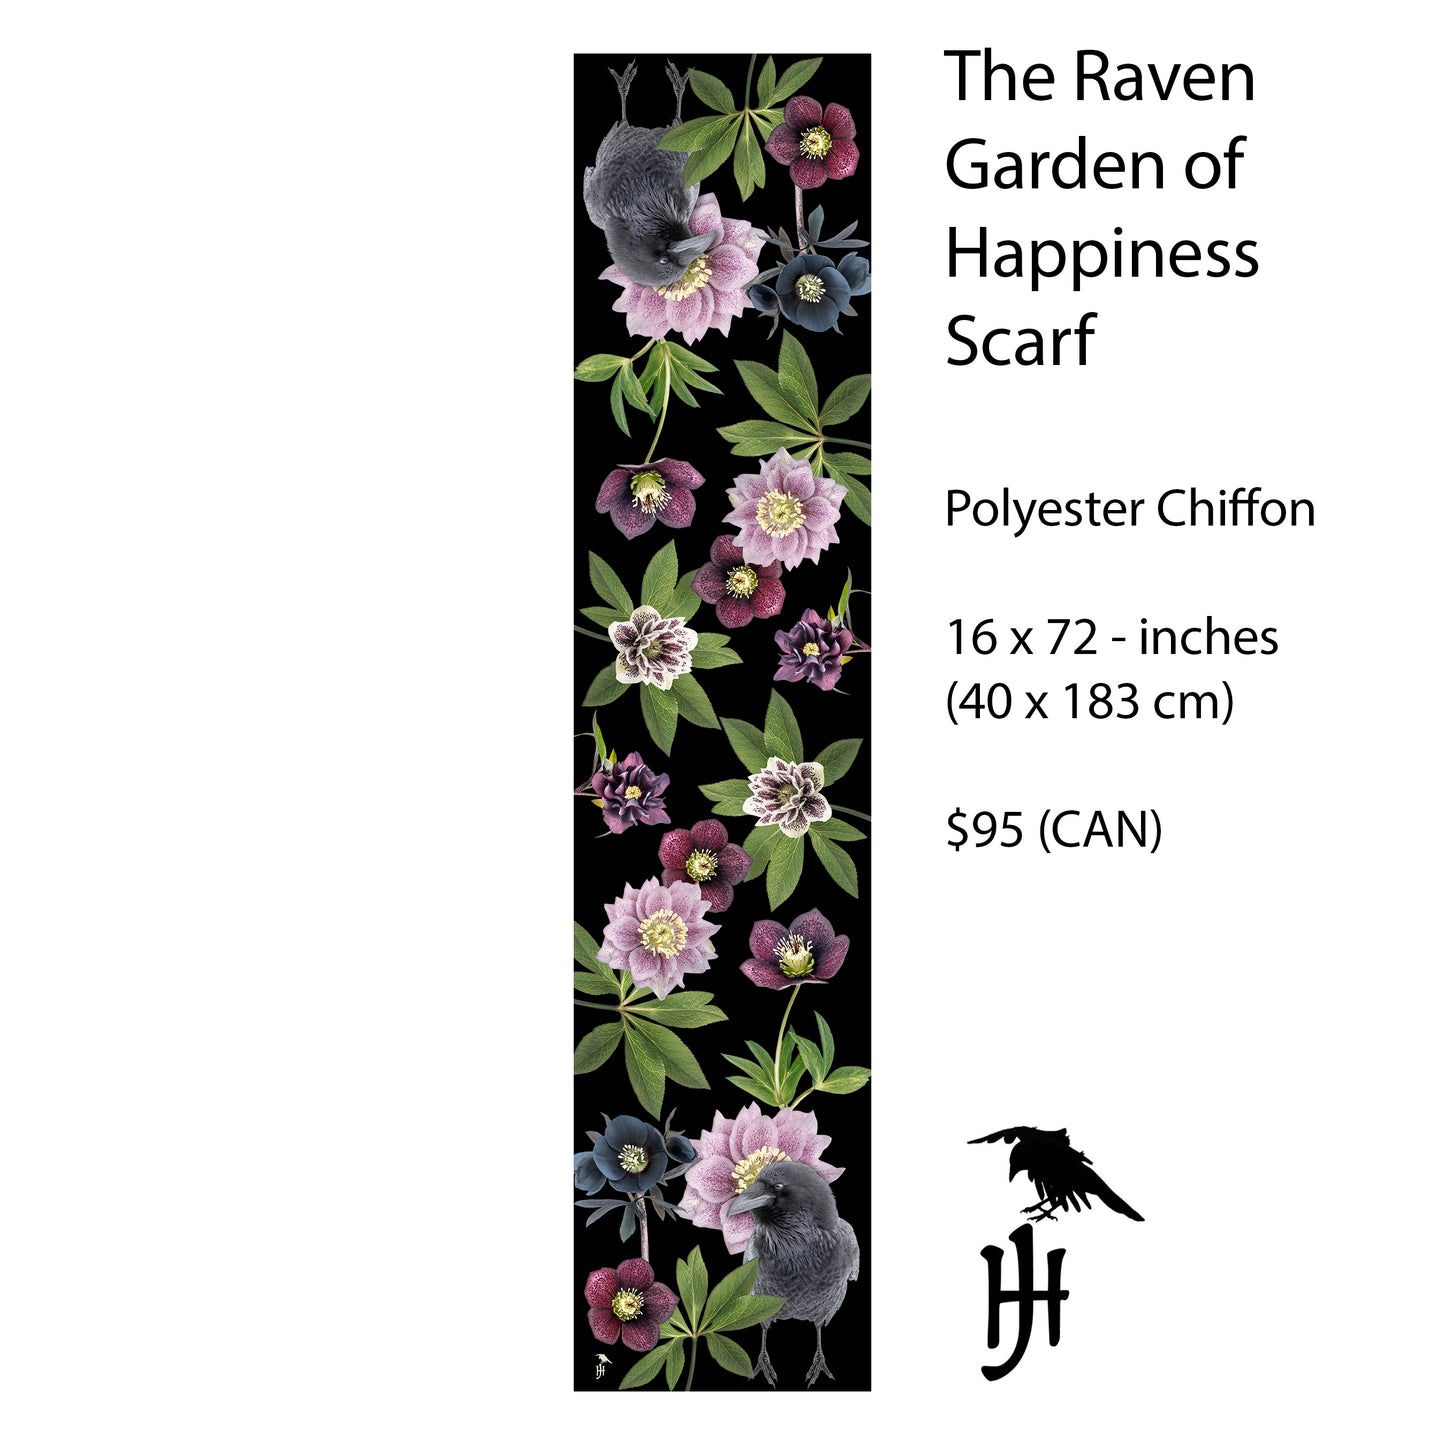 THE RAVEN GARDEN OF HAPPINESS - Long PolyChiffon Scarf